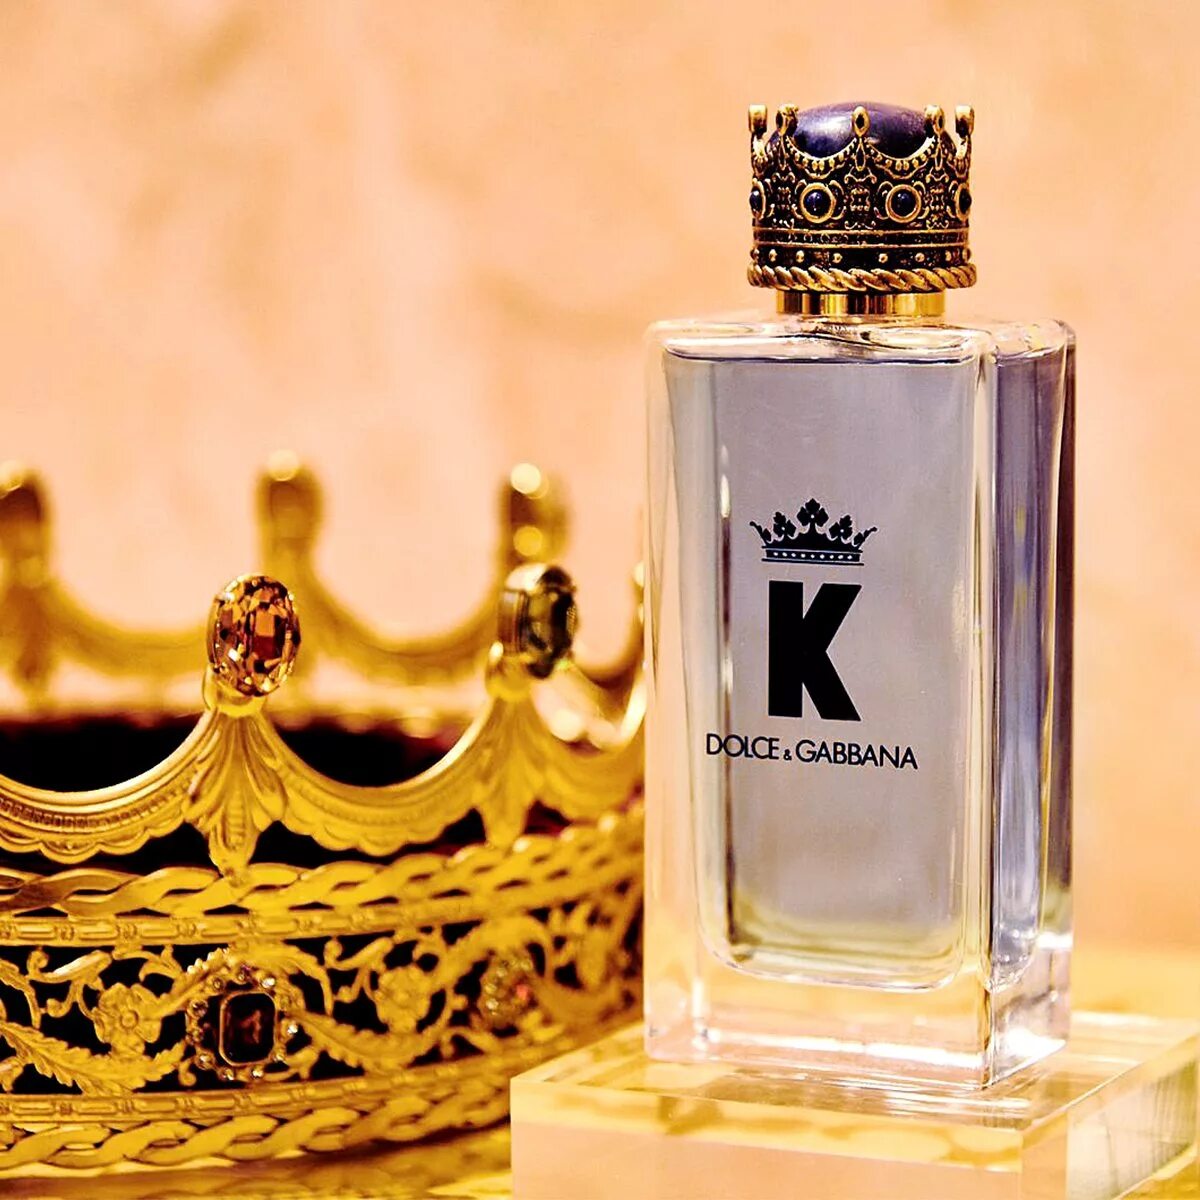 Dolce Gabbana King 100ml. Dolce Gabbana King Parfum. Dolce & Gabbana King Eau de Parfum 100 ml. Dolce Gabbana k King 100ml EDT. Дольче габбана королева духи